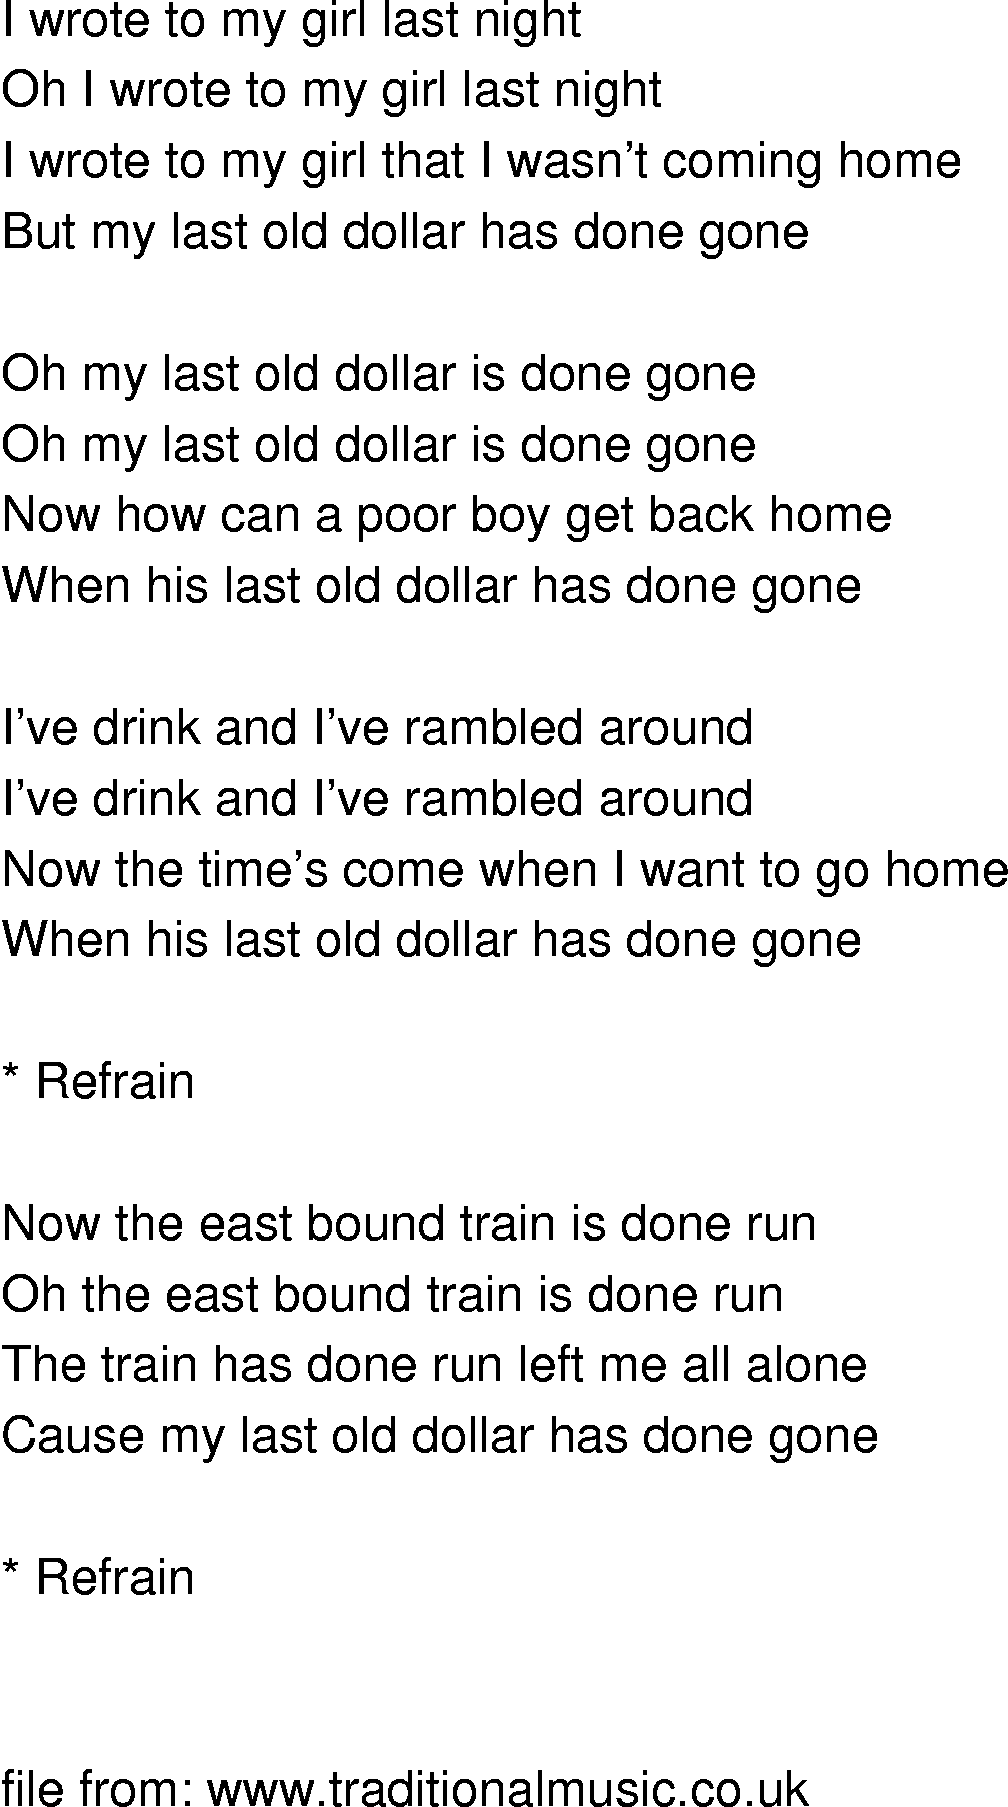 Old-Time (oldtimey) Song Lyrics - my last ol dollar